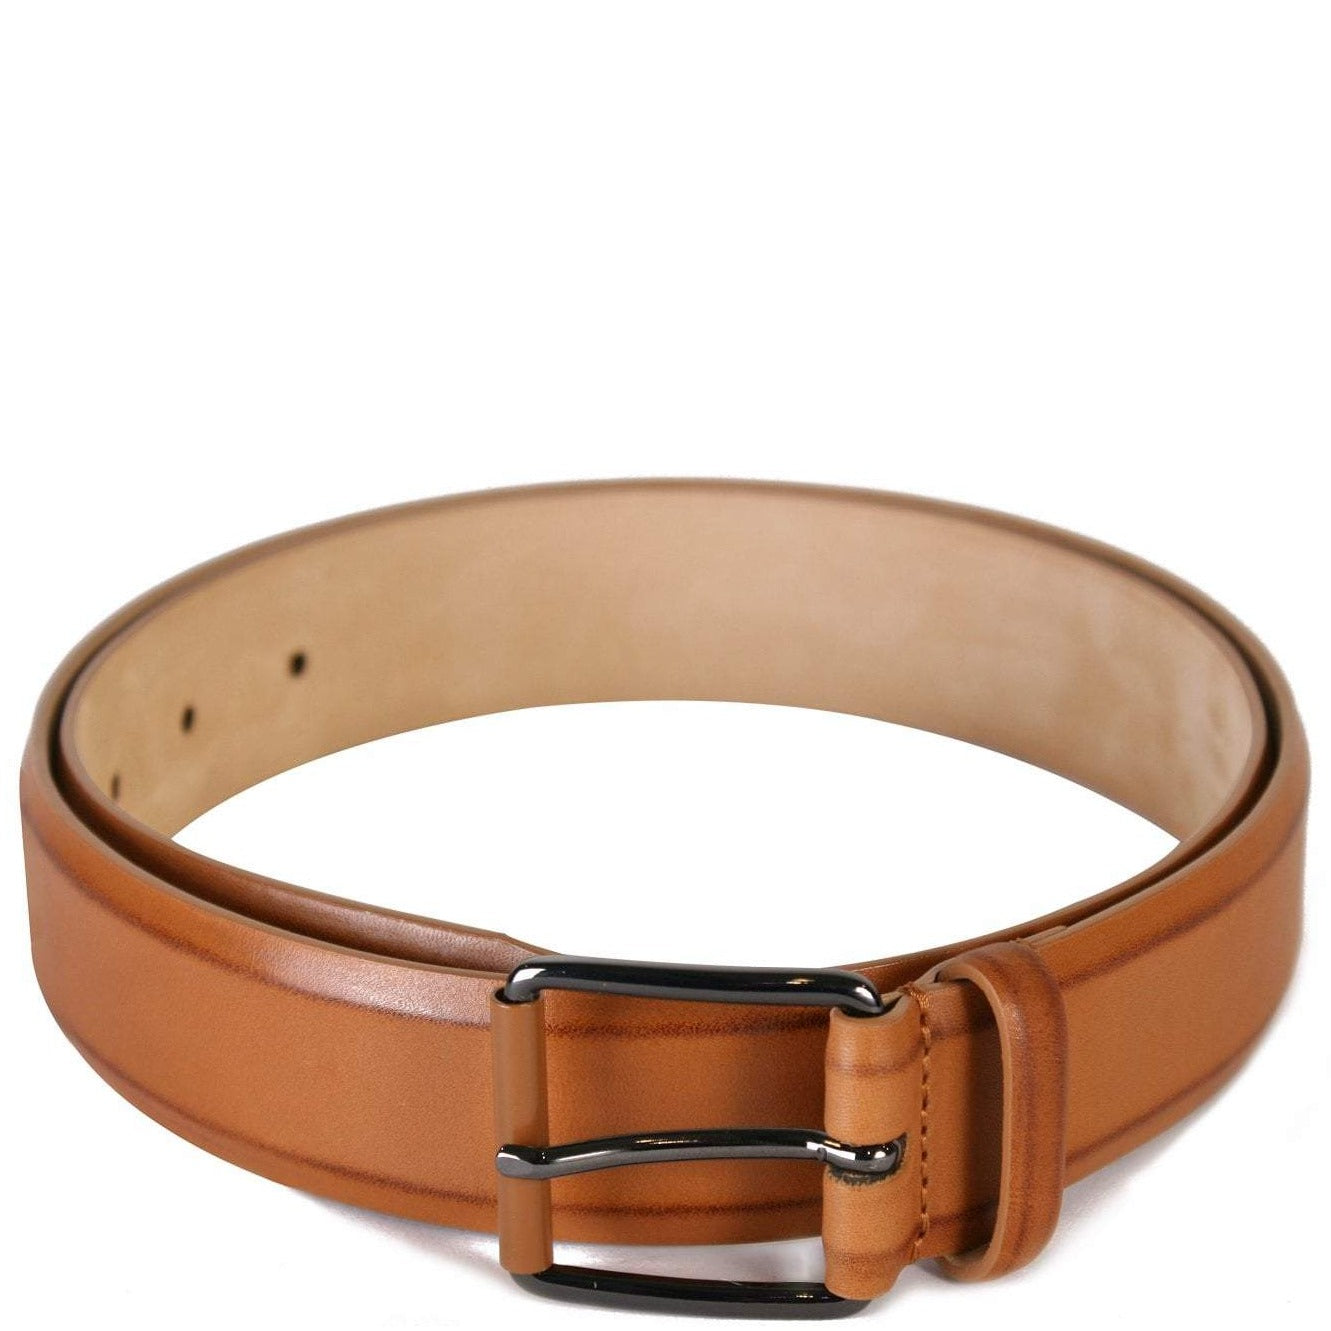 Armani Collezioni Men's Calfskin Leather Belt Tan - BROWN 34 30